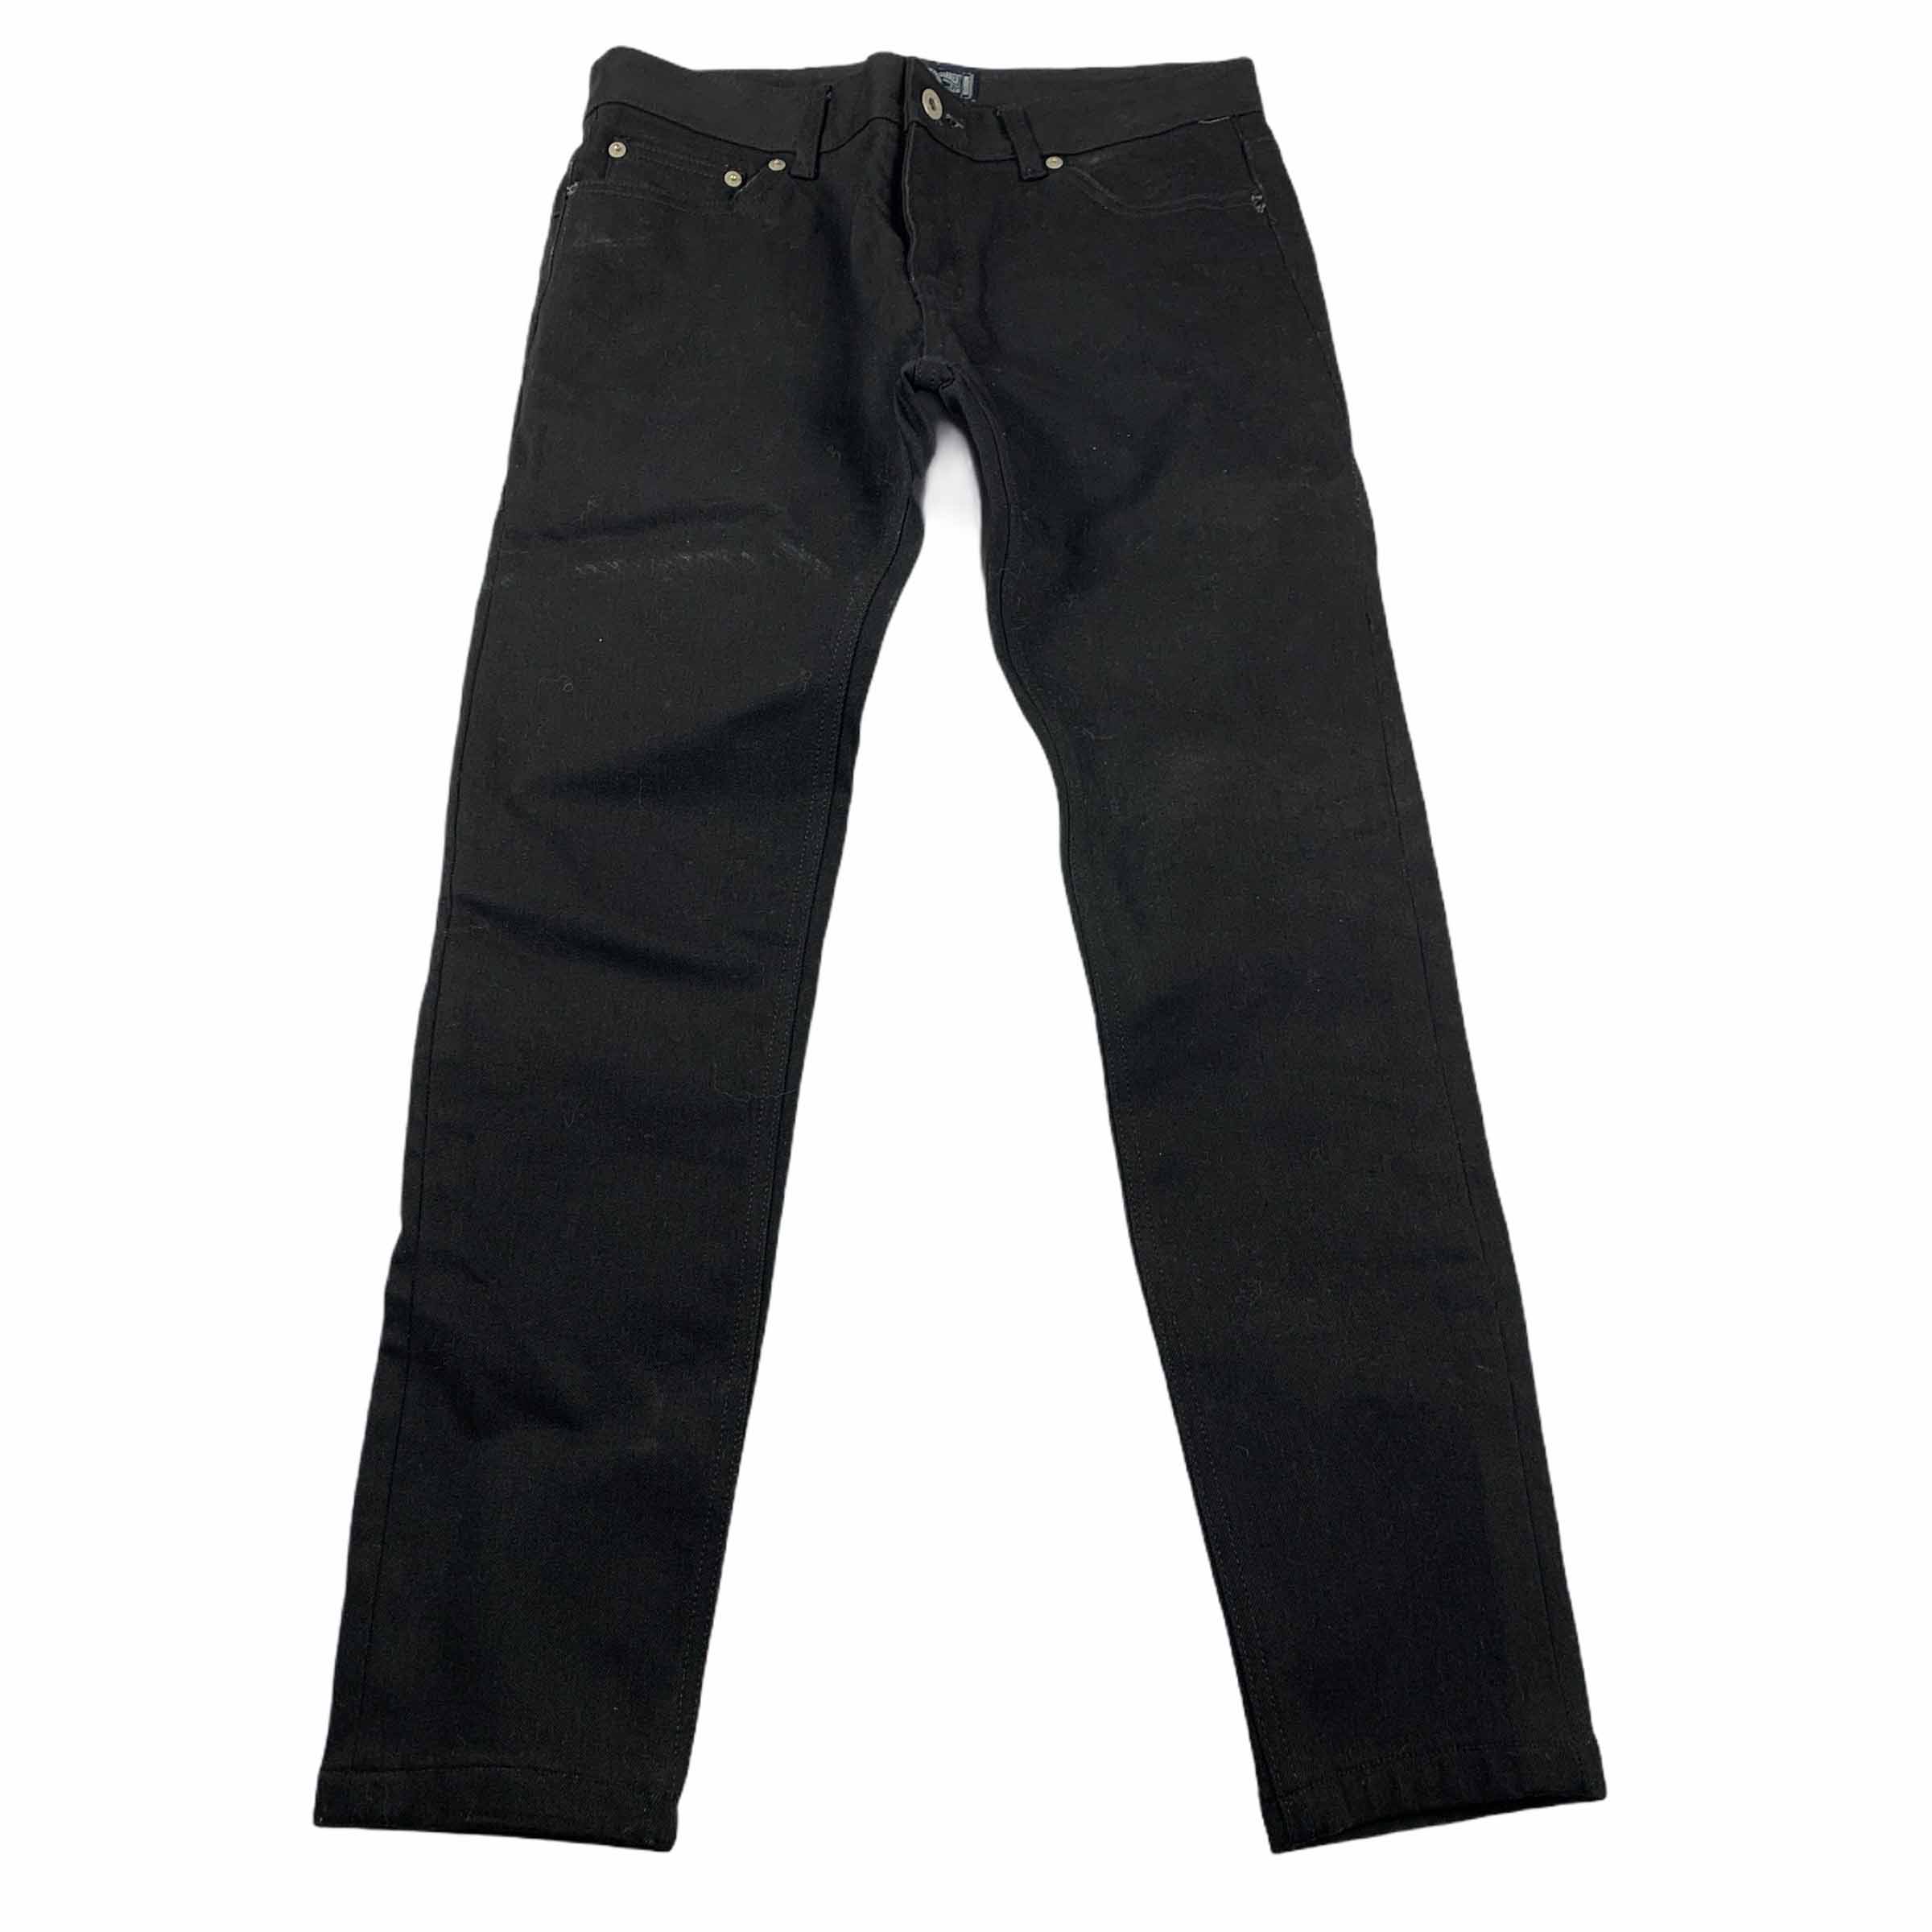 [Modified] Skinny Pants BK 31/30 - Size 31/30